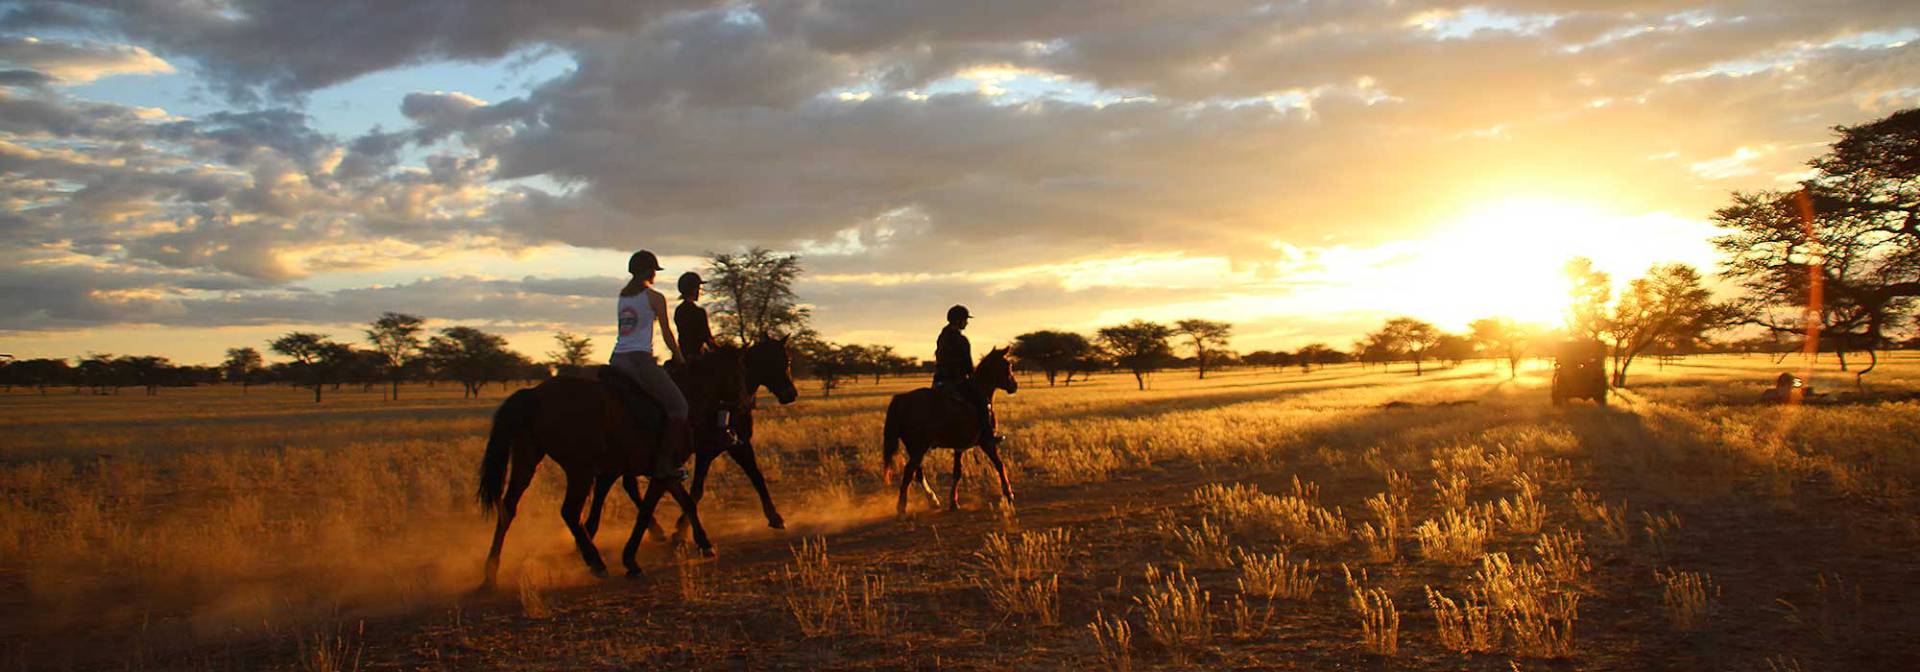 Sonnenuntergangsausritte in Namibia